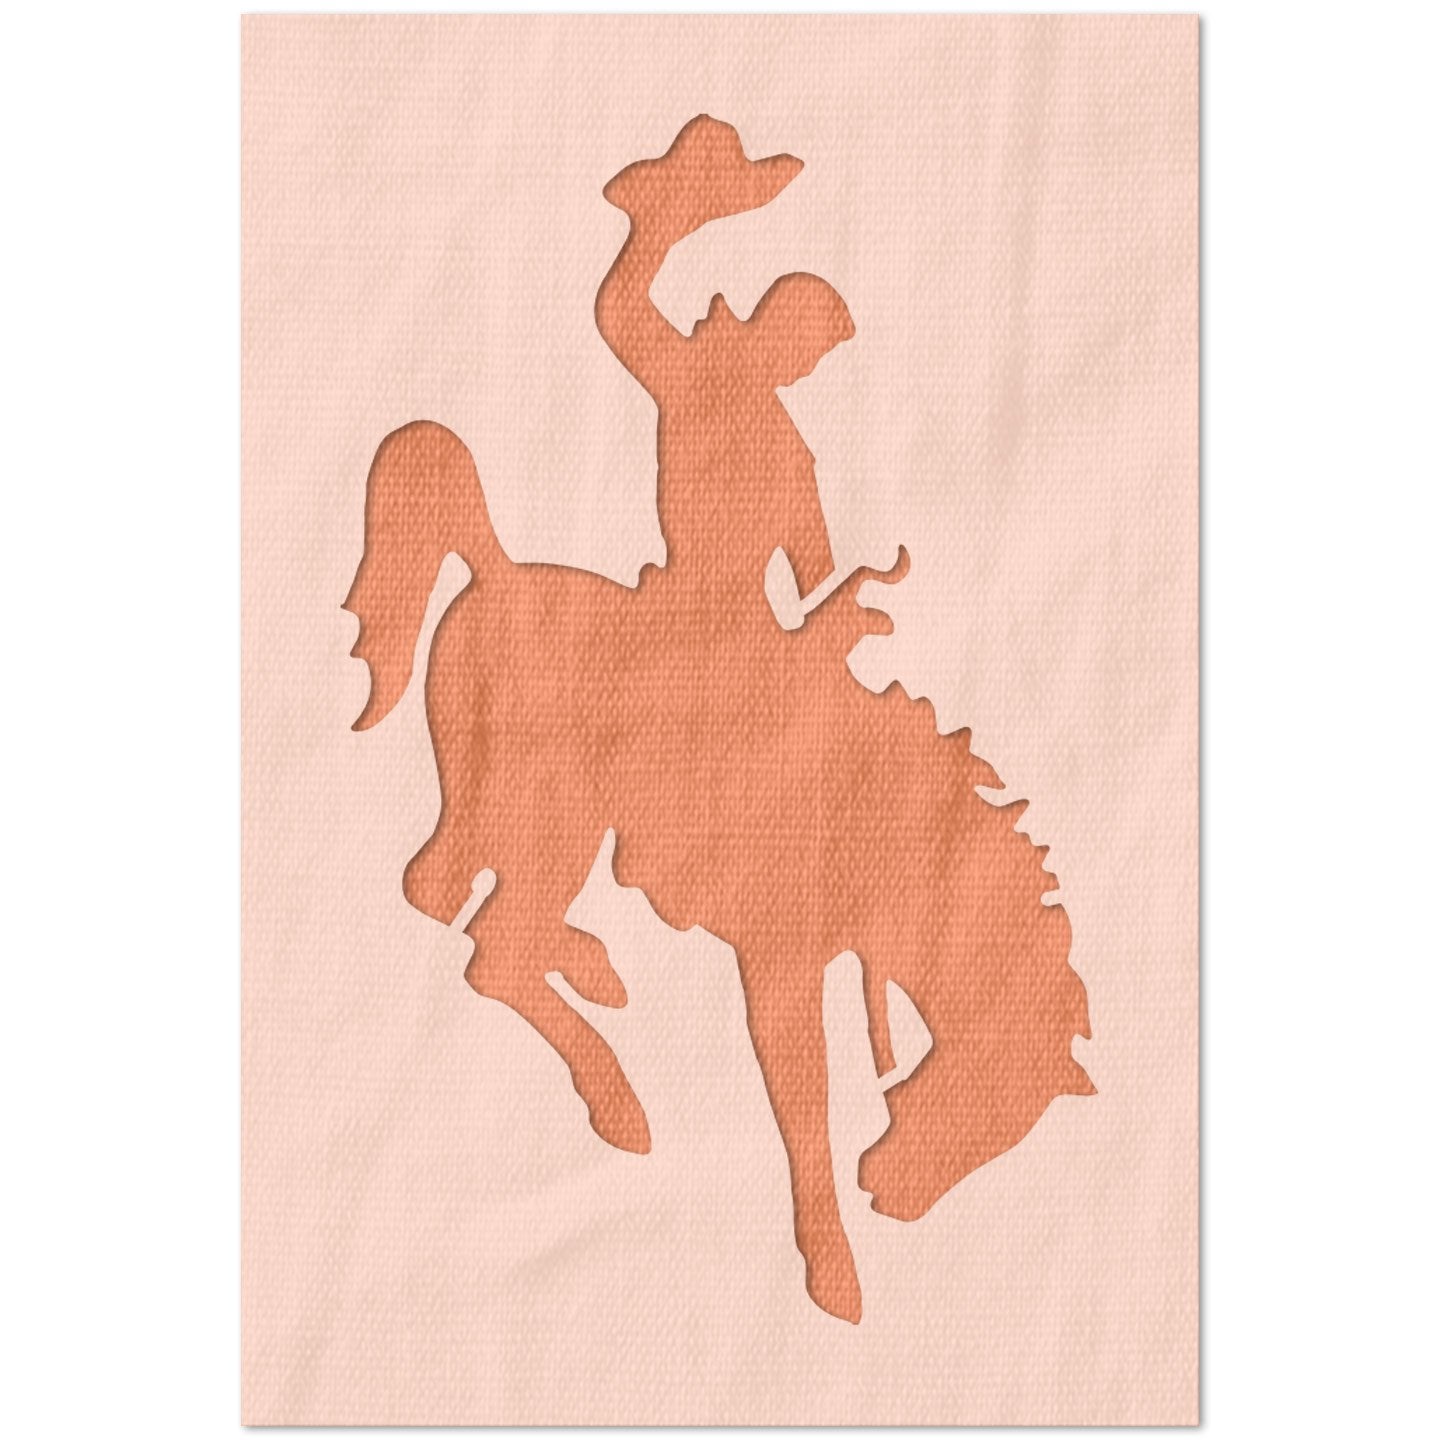 Cowboy on a Horse Stencil